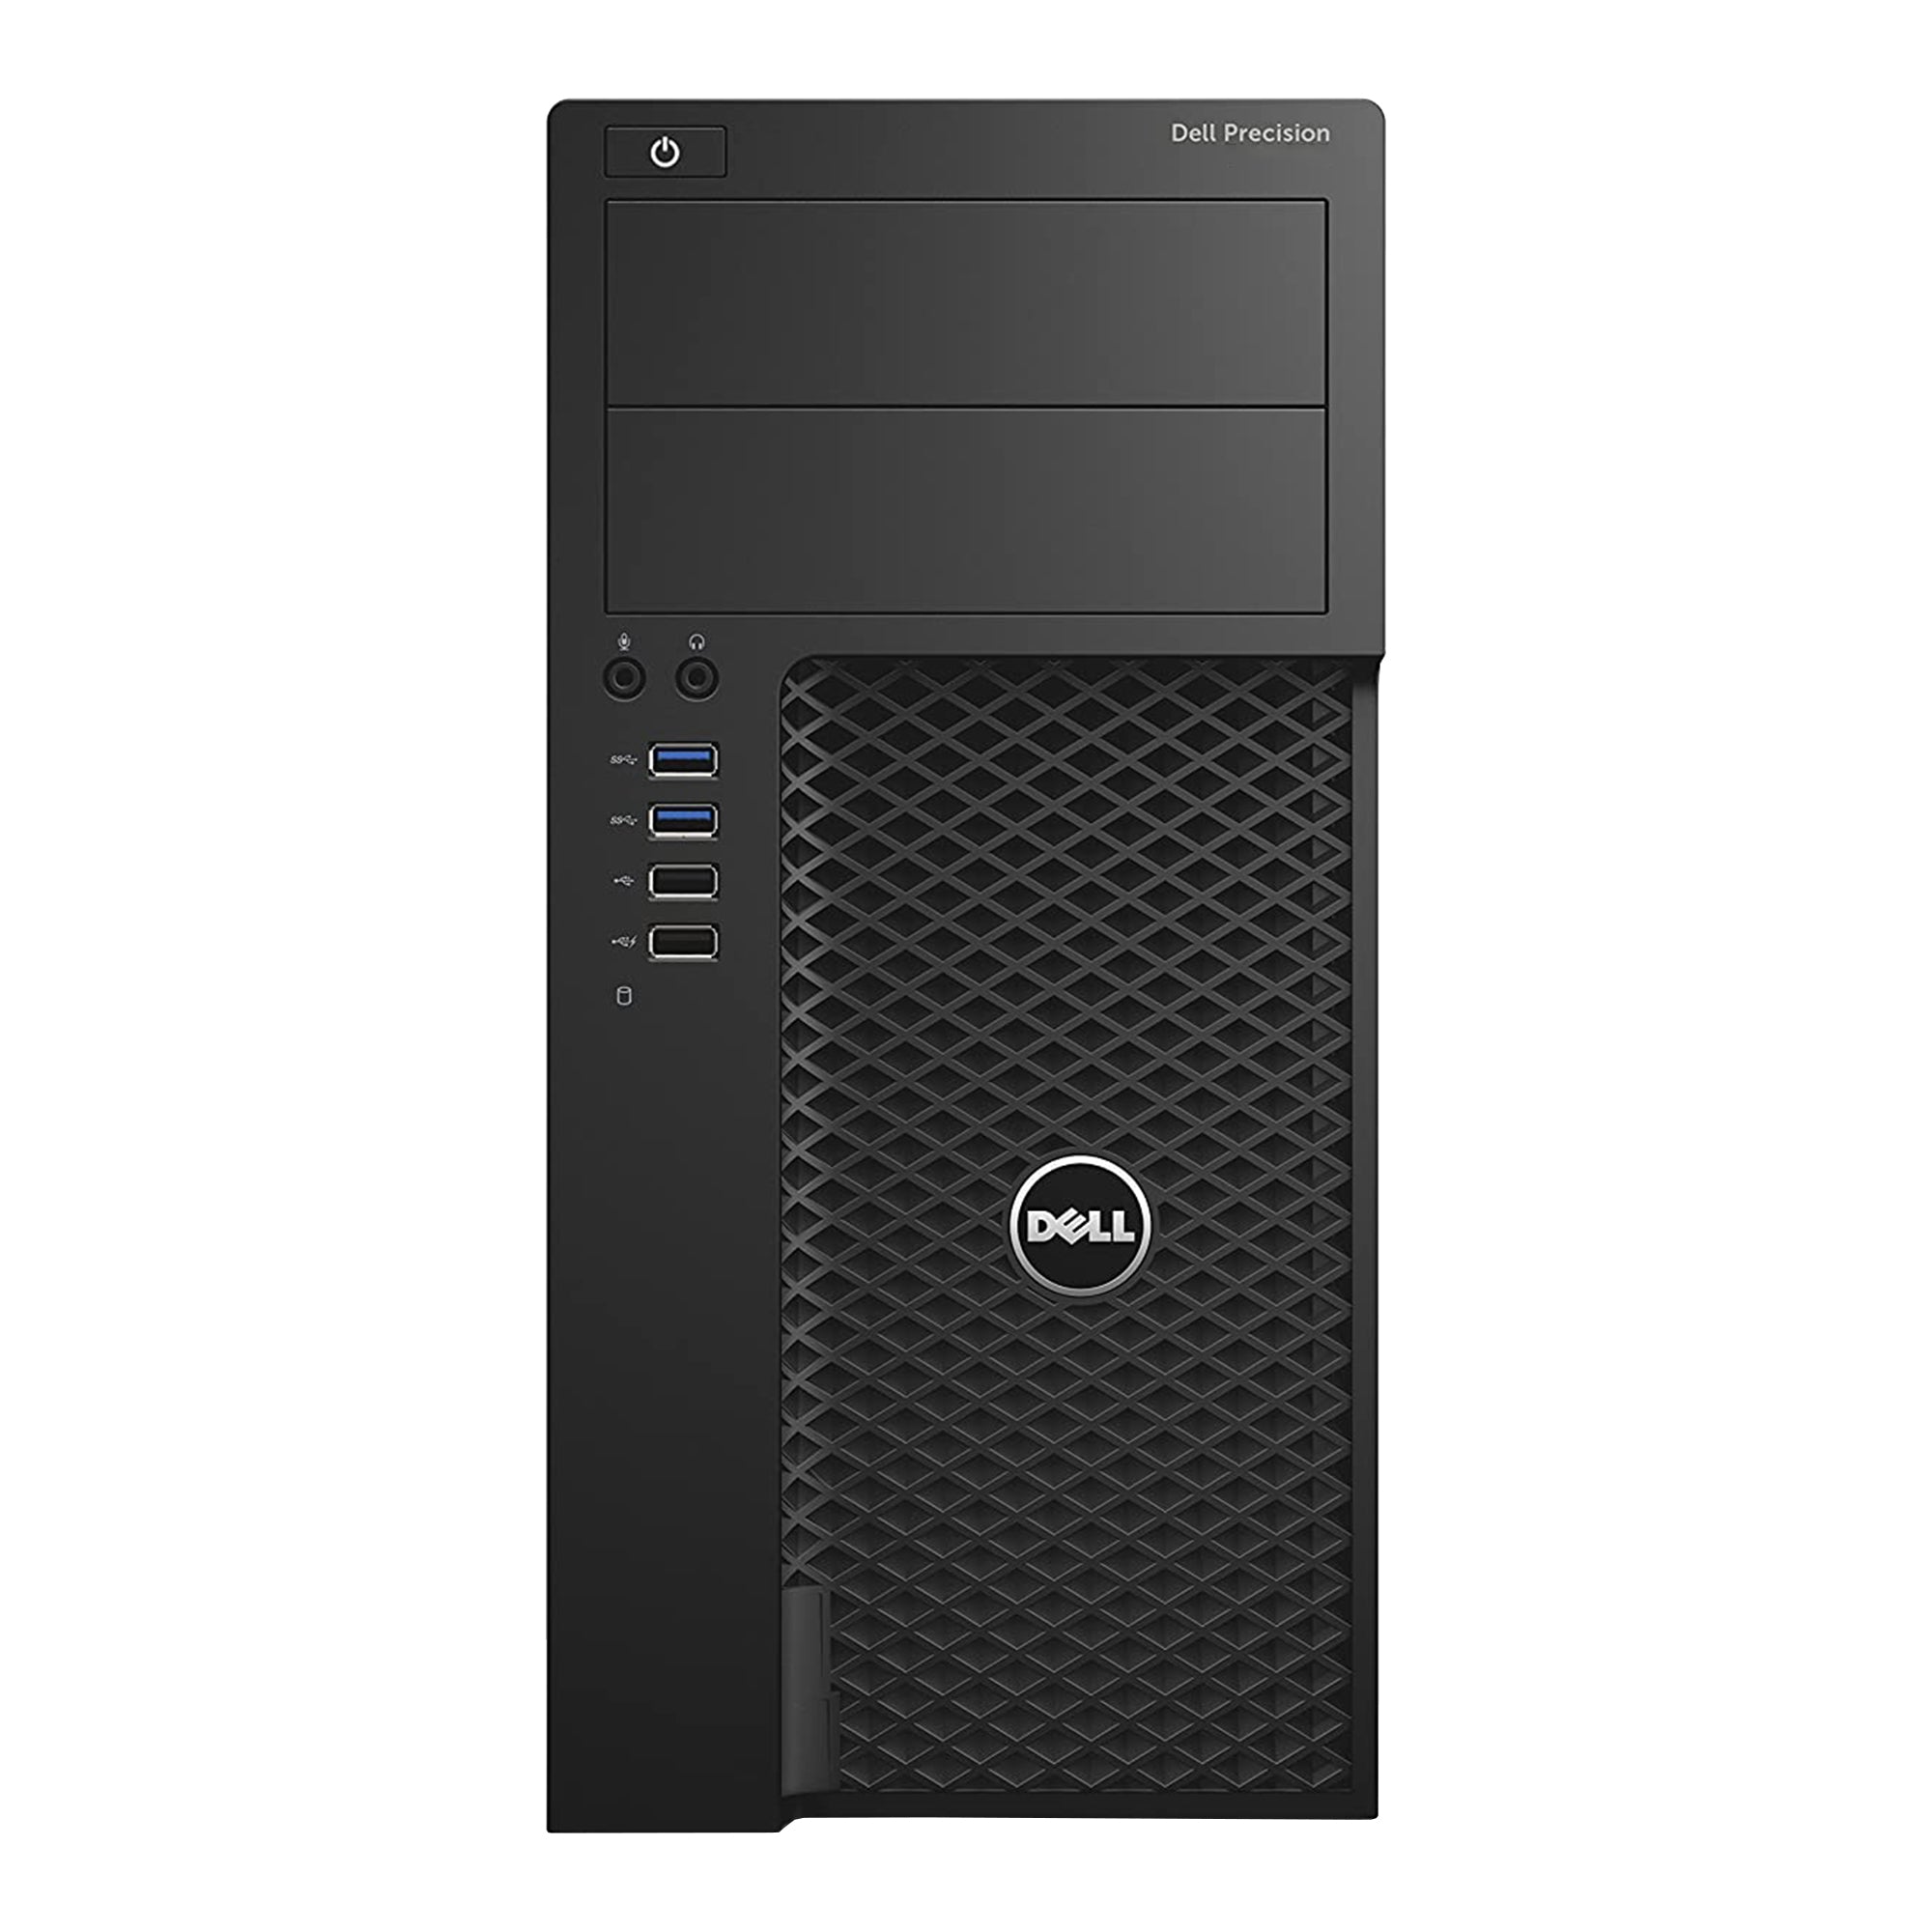 Dell Precision T3620 Tower Desktop Computer PC| Intel Core i5 - (6500) 6th Gen, Intel Core i7 - (6700) 6th Gen| 8GB - 32GB DDR4 RAM| 512GB -2TB SSD| Windows 10 Pro|  - Refurbished